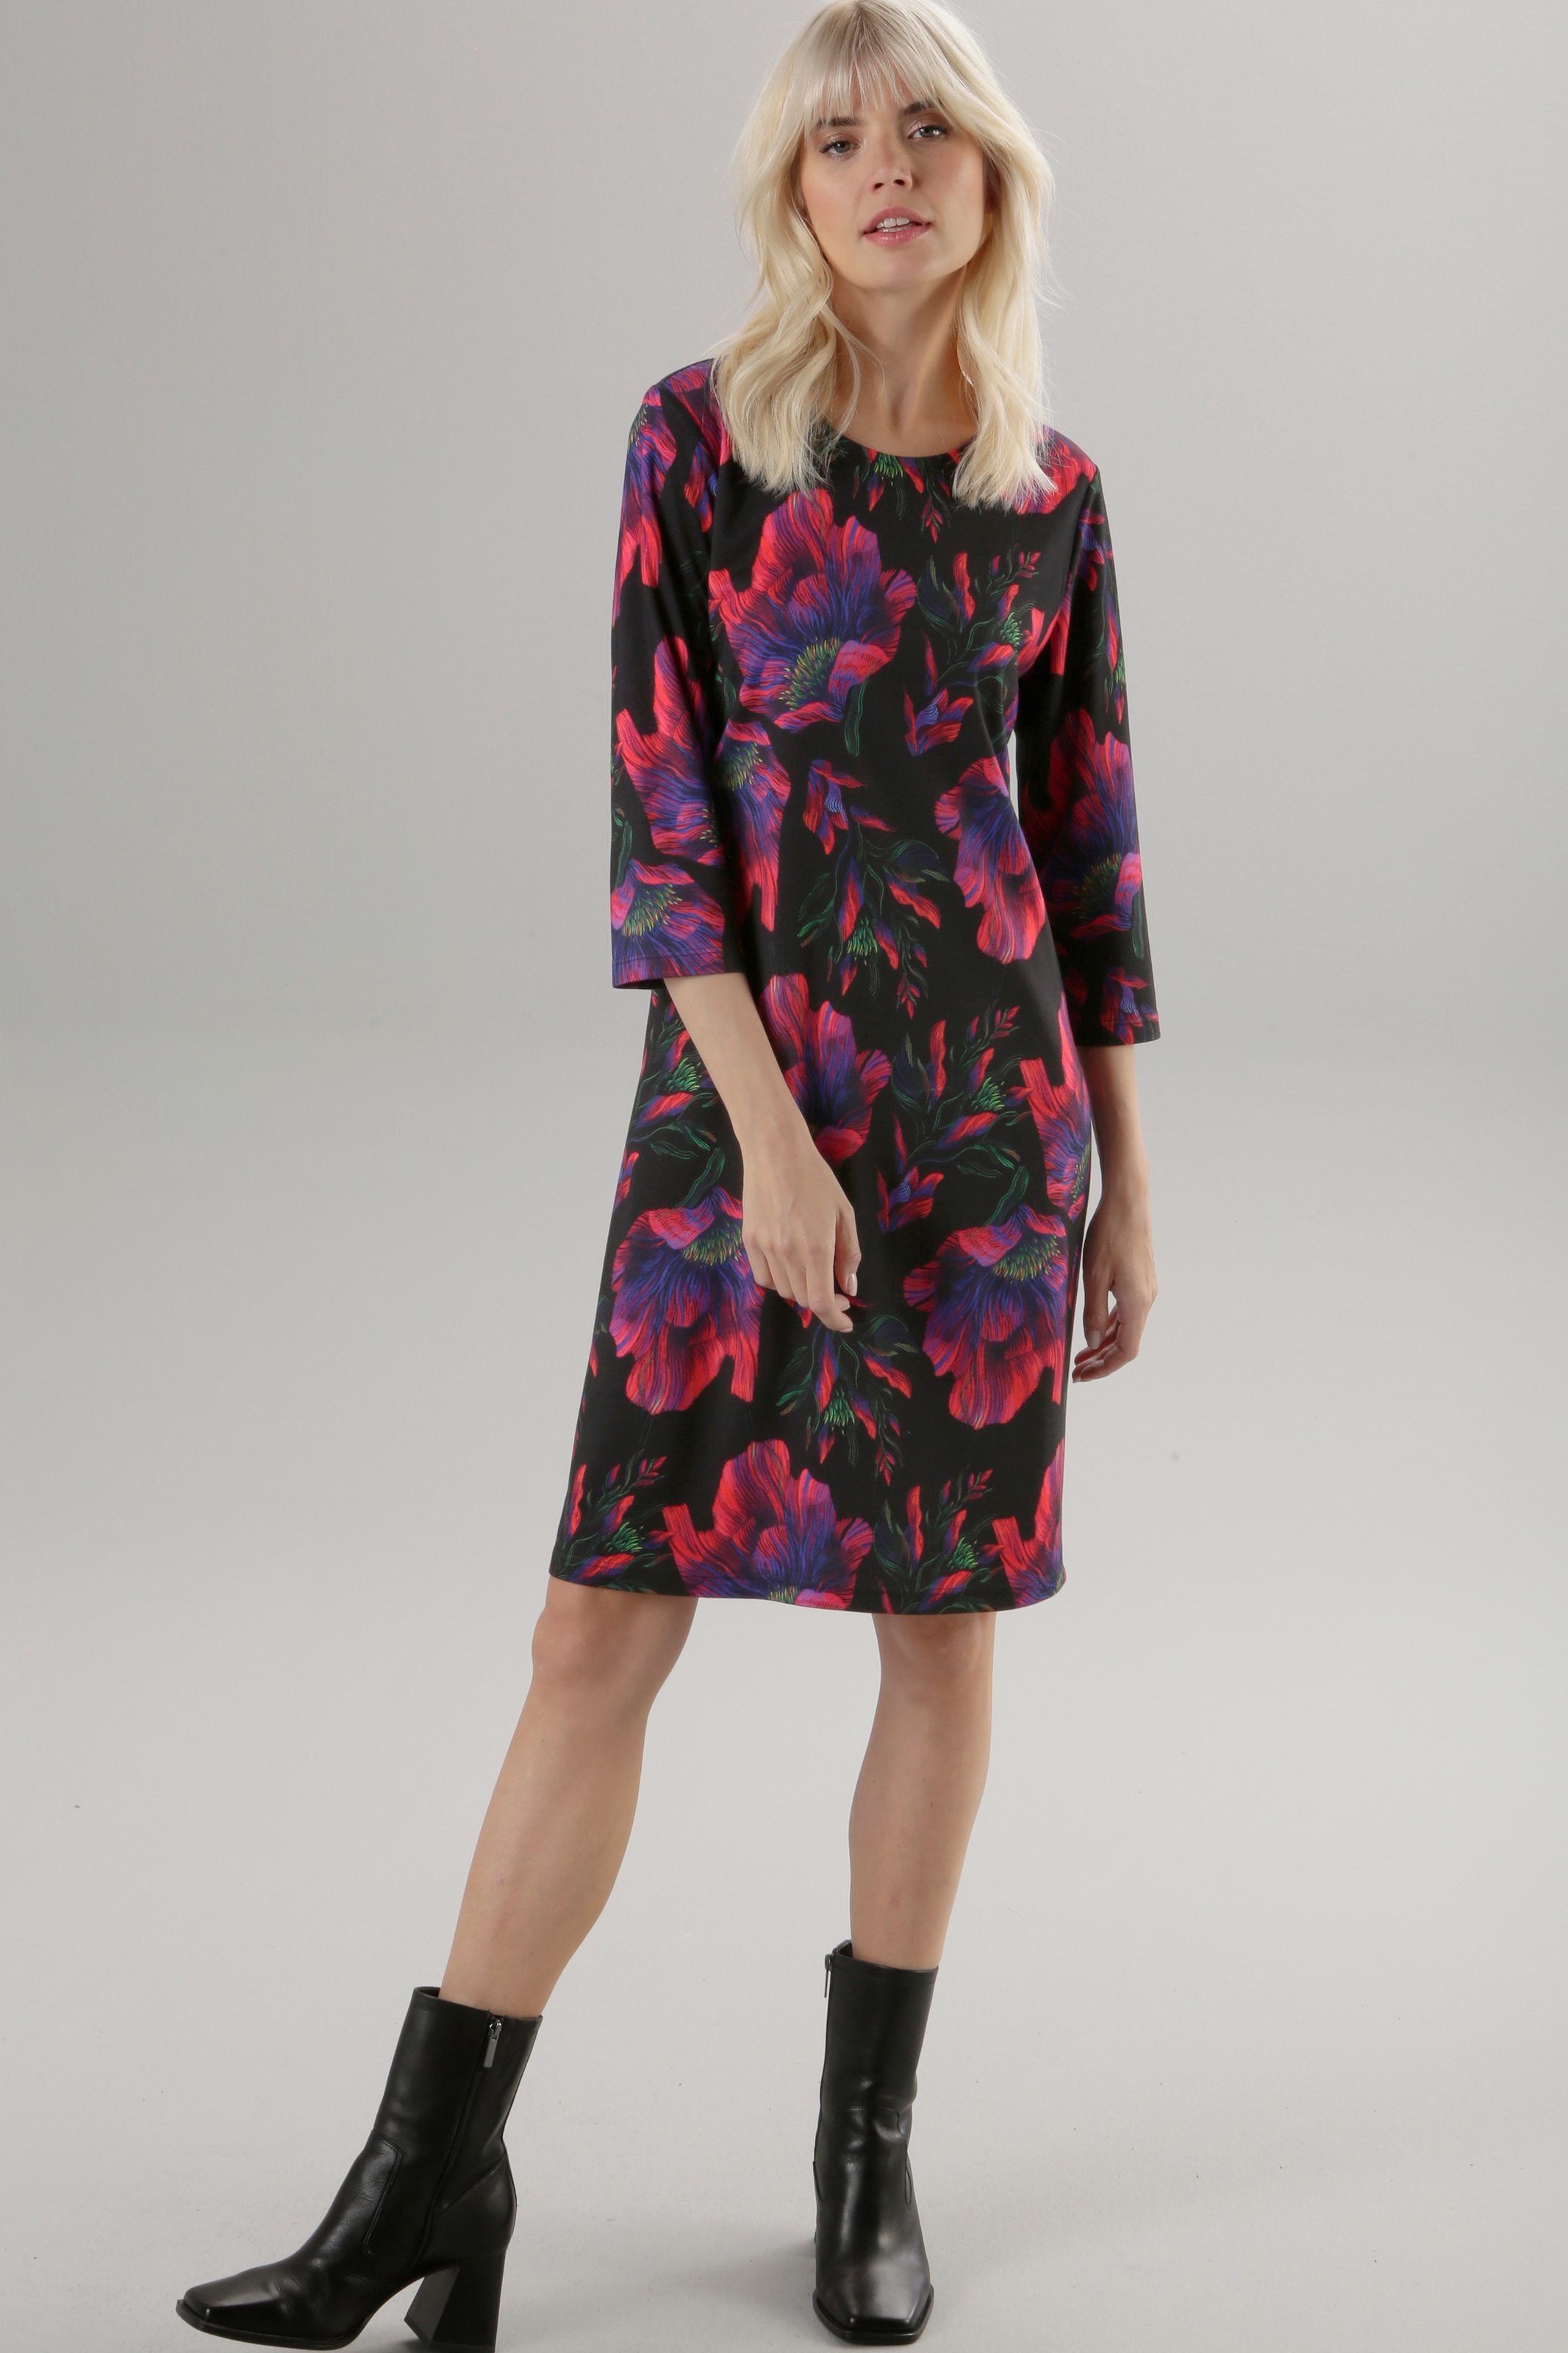 Aniston SELECTED Jerseykleid, Blumendruck Knallfarben kaufen in mit